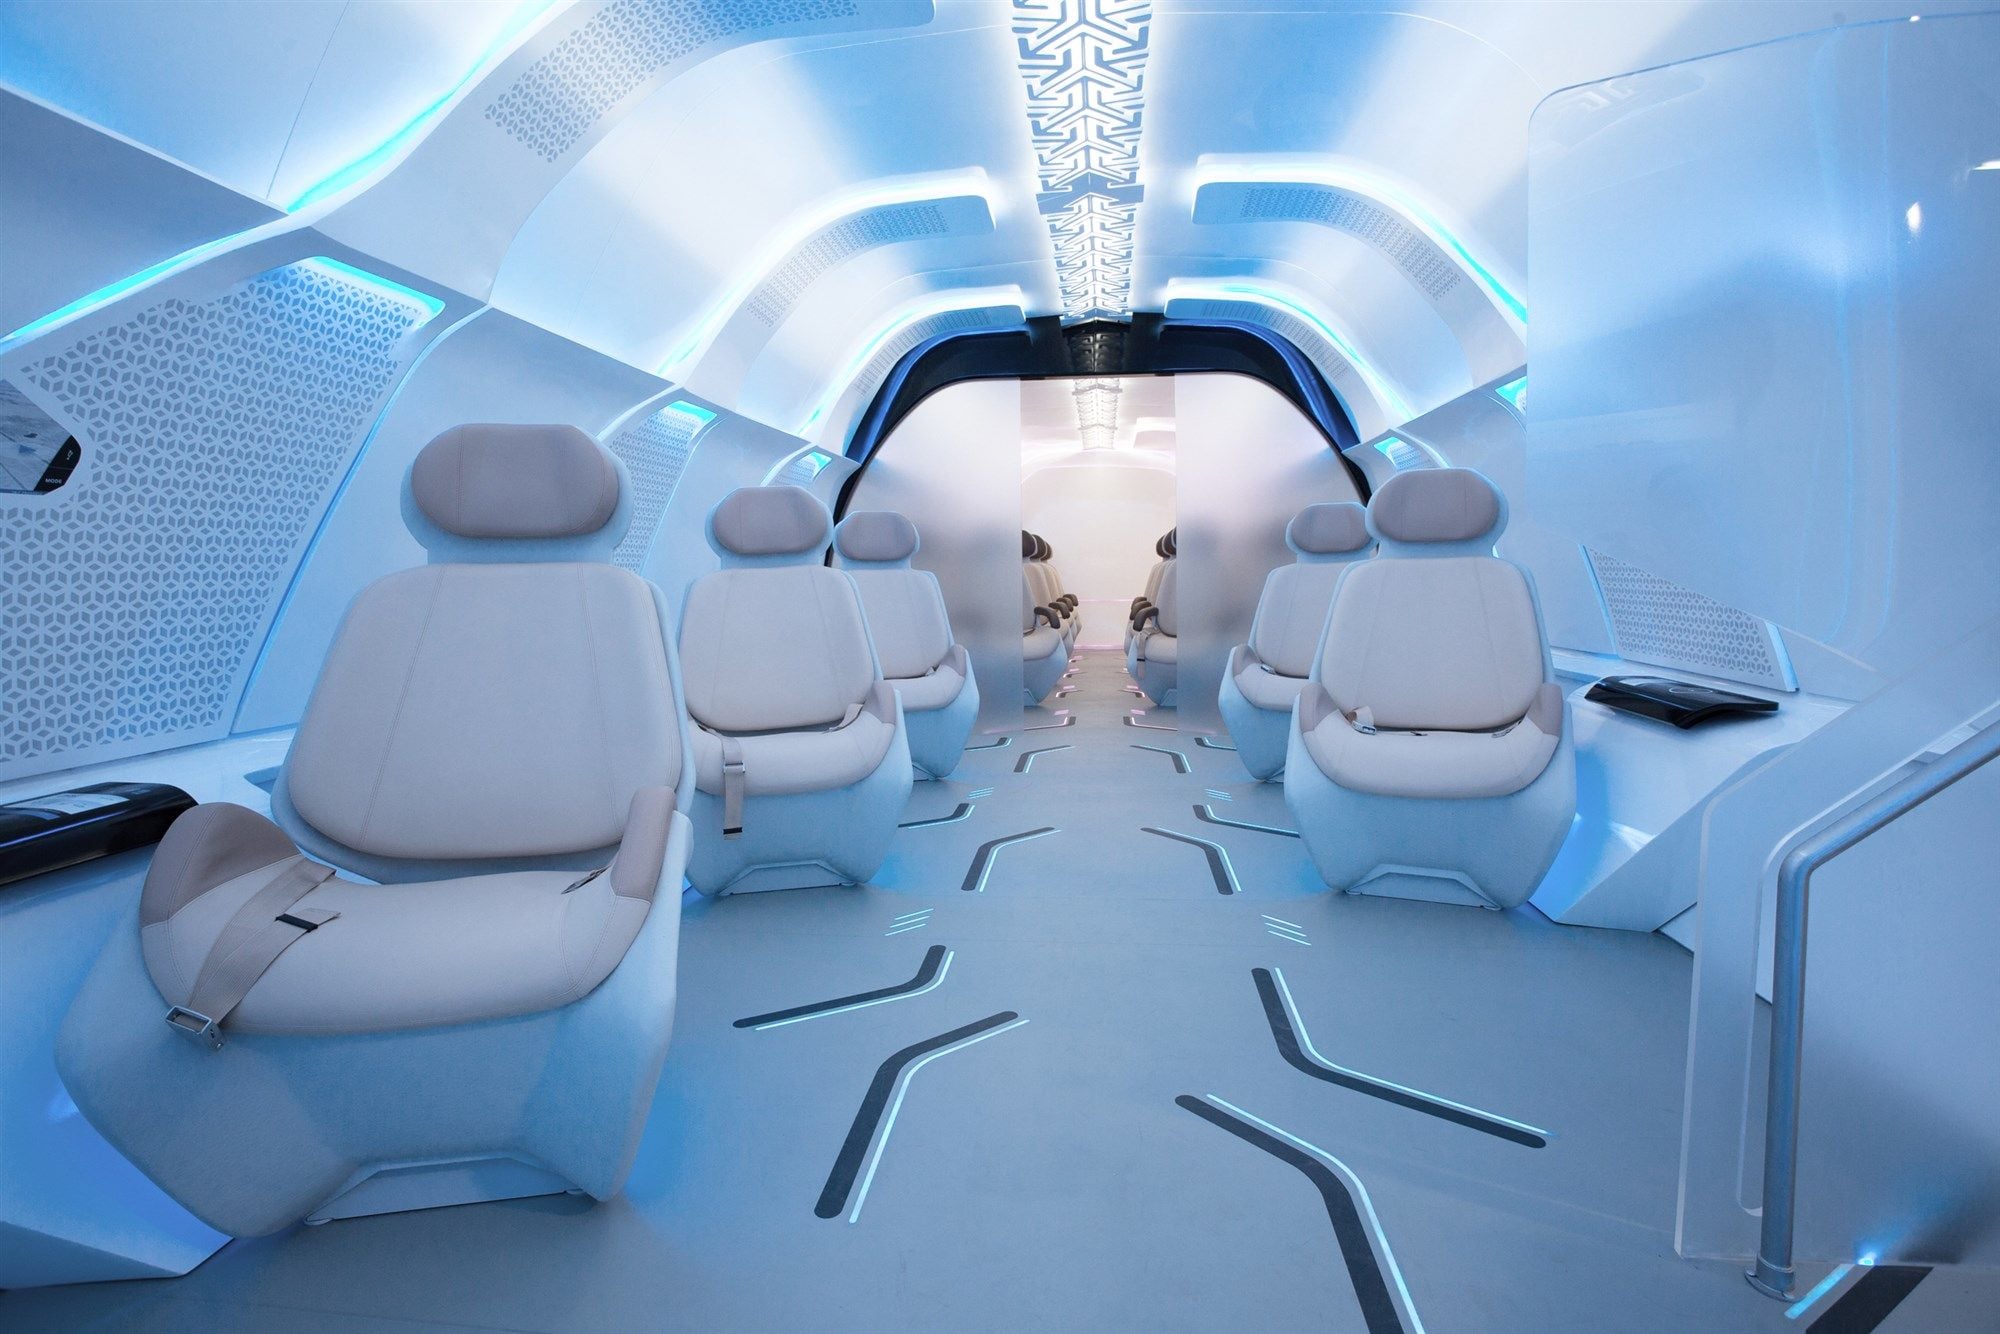 The sleek modern interior of the Virgin Hyperloop passenger pod.